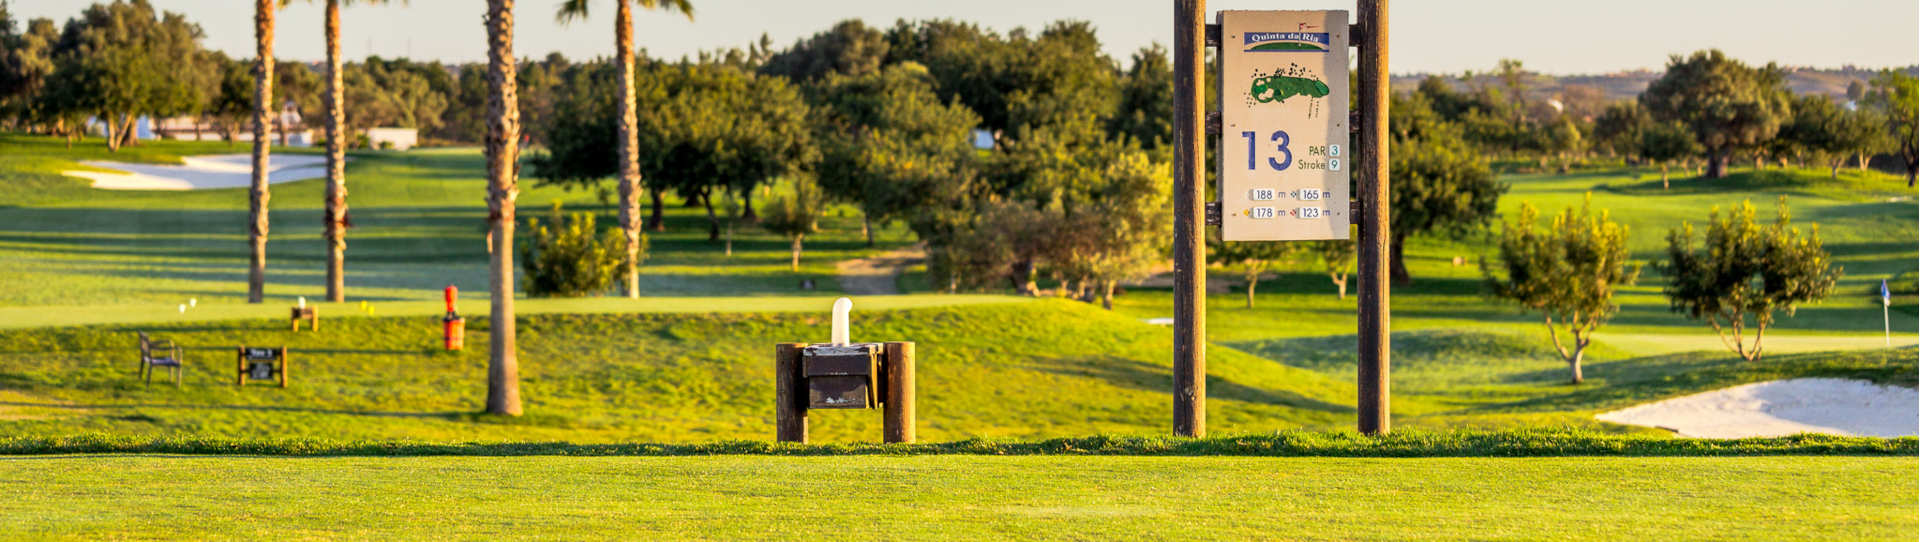 Portugal golf courses - Quinta da Ria Golf Course - Photo 2